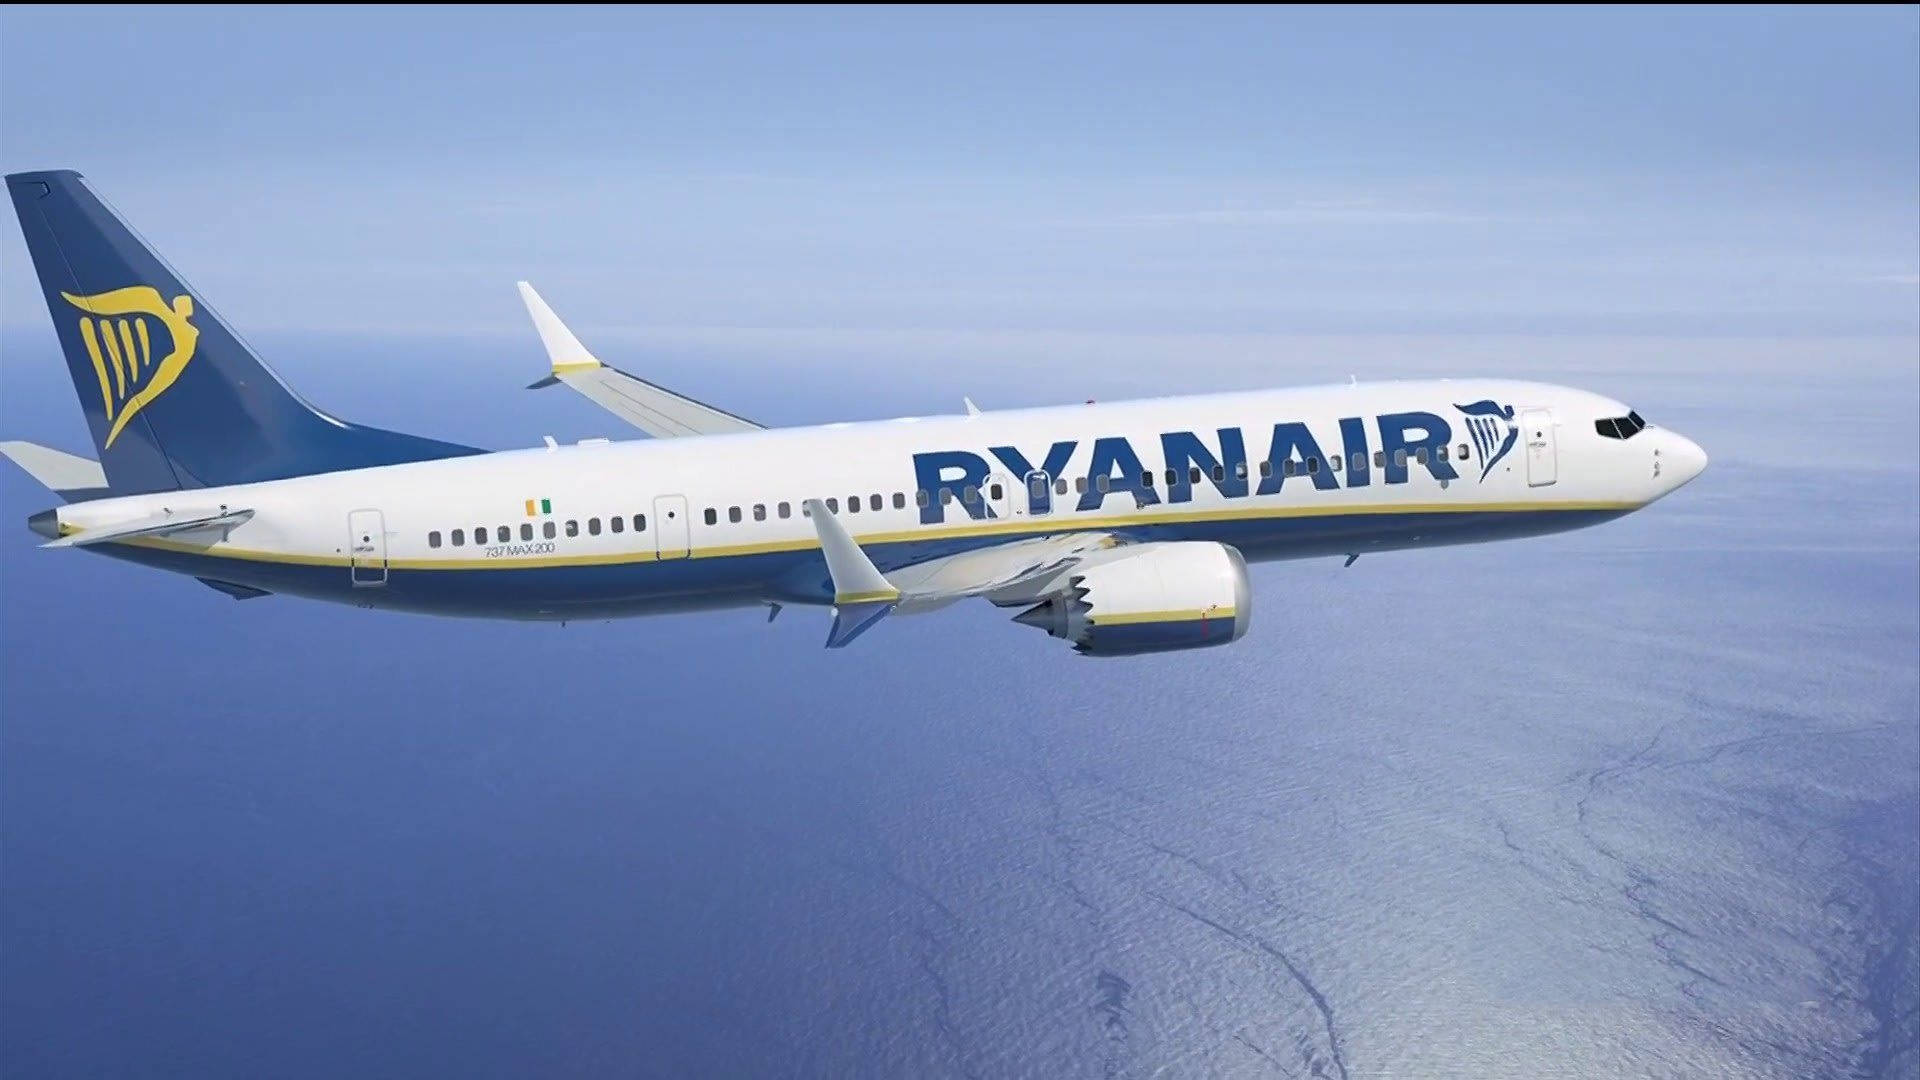 Ryanairflyger Över Havet. Wallpaper